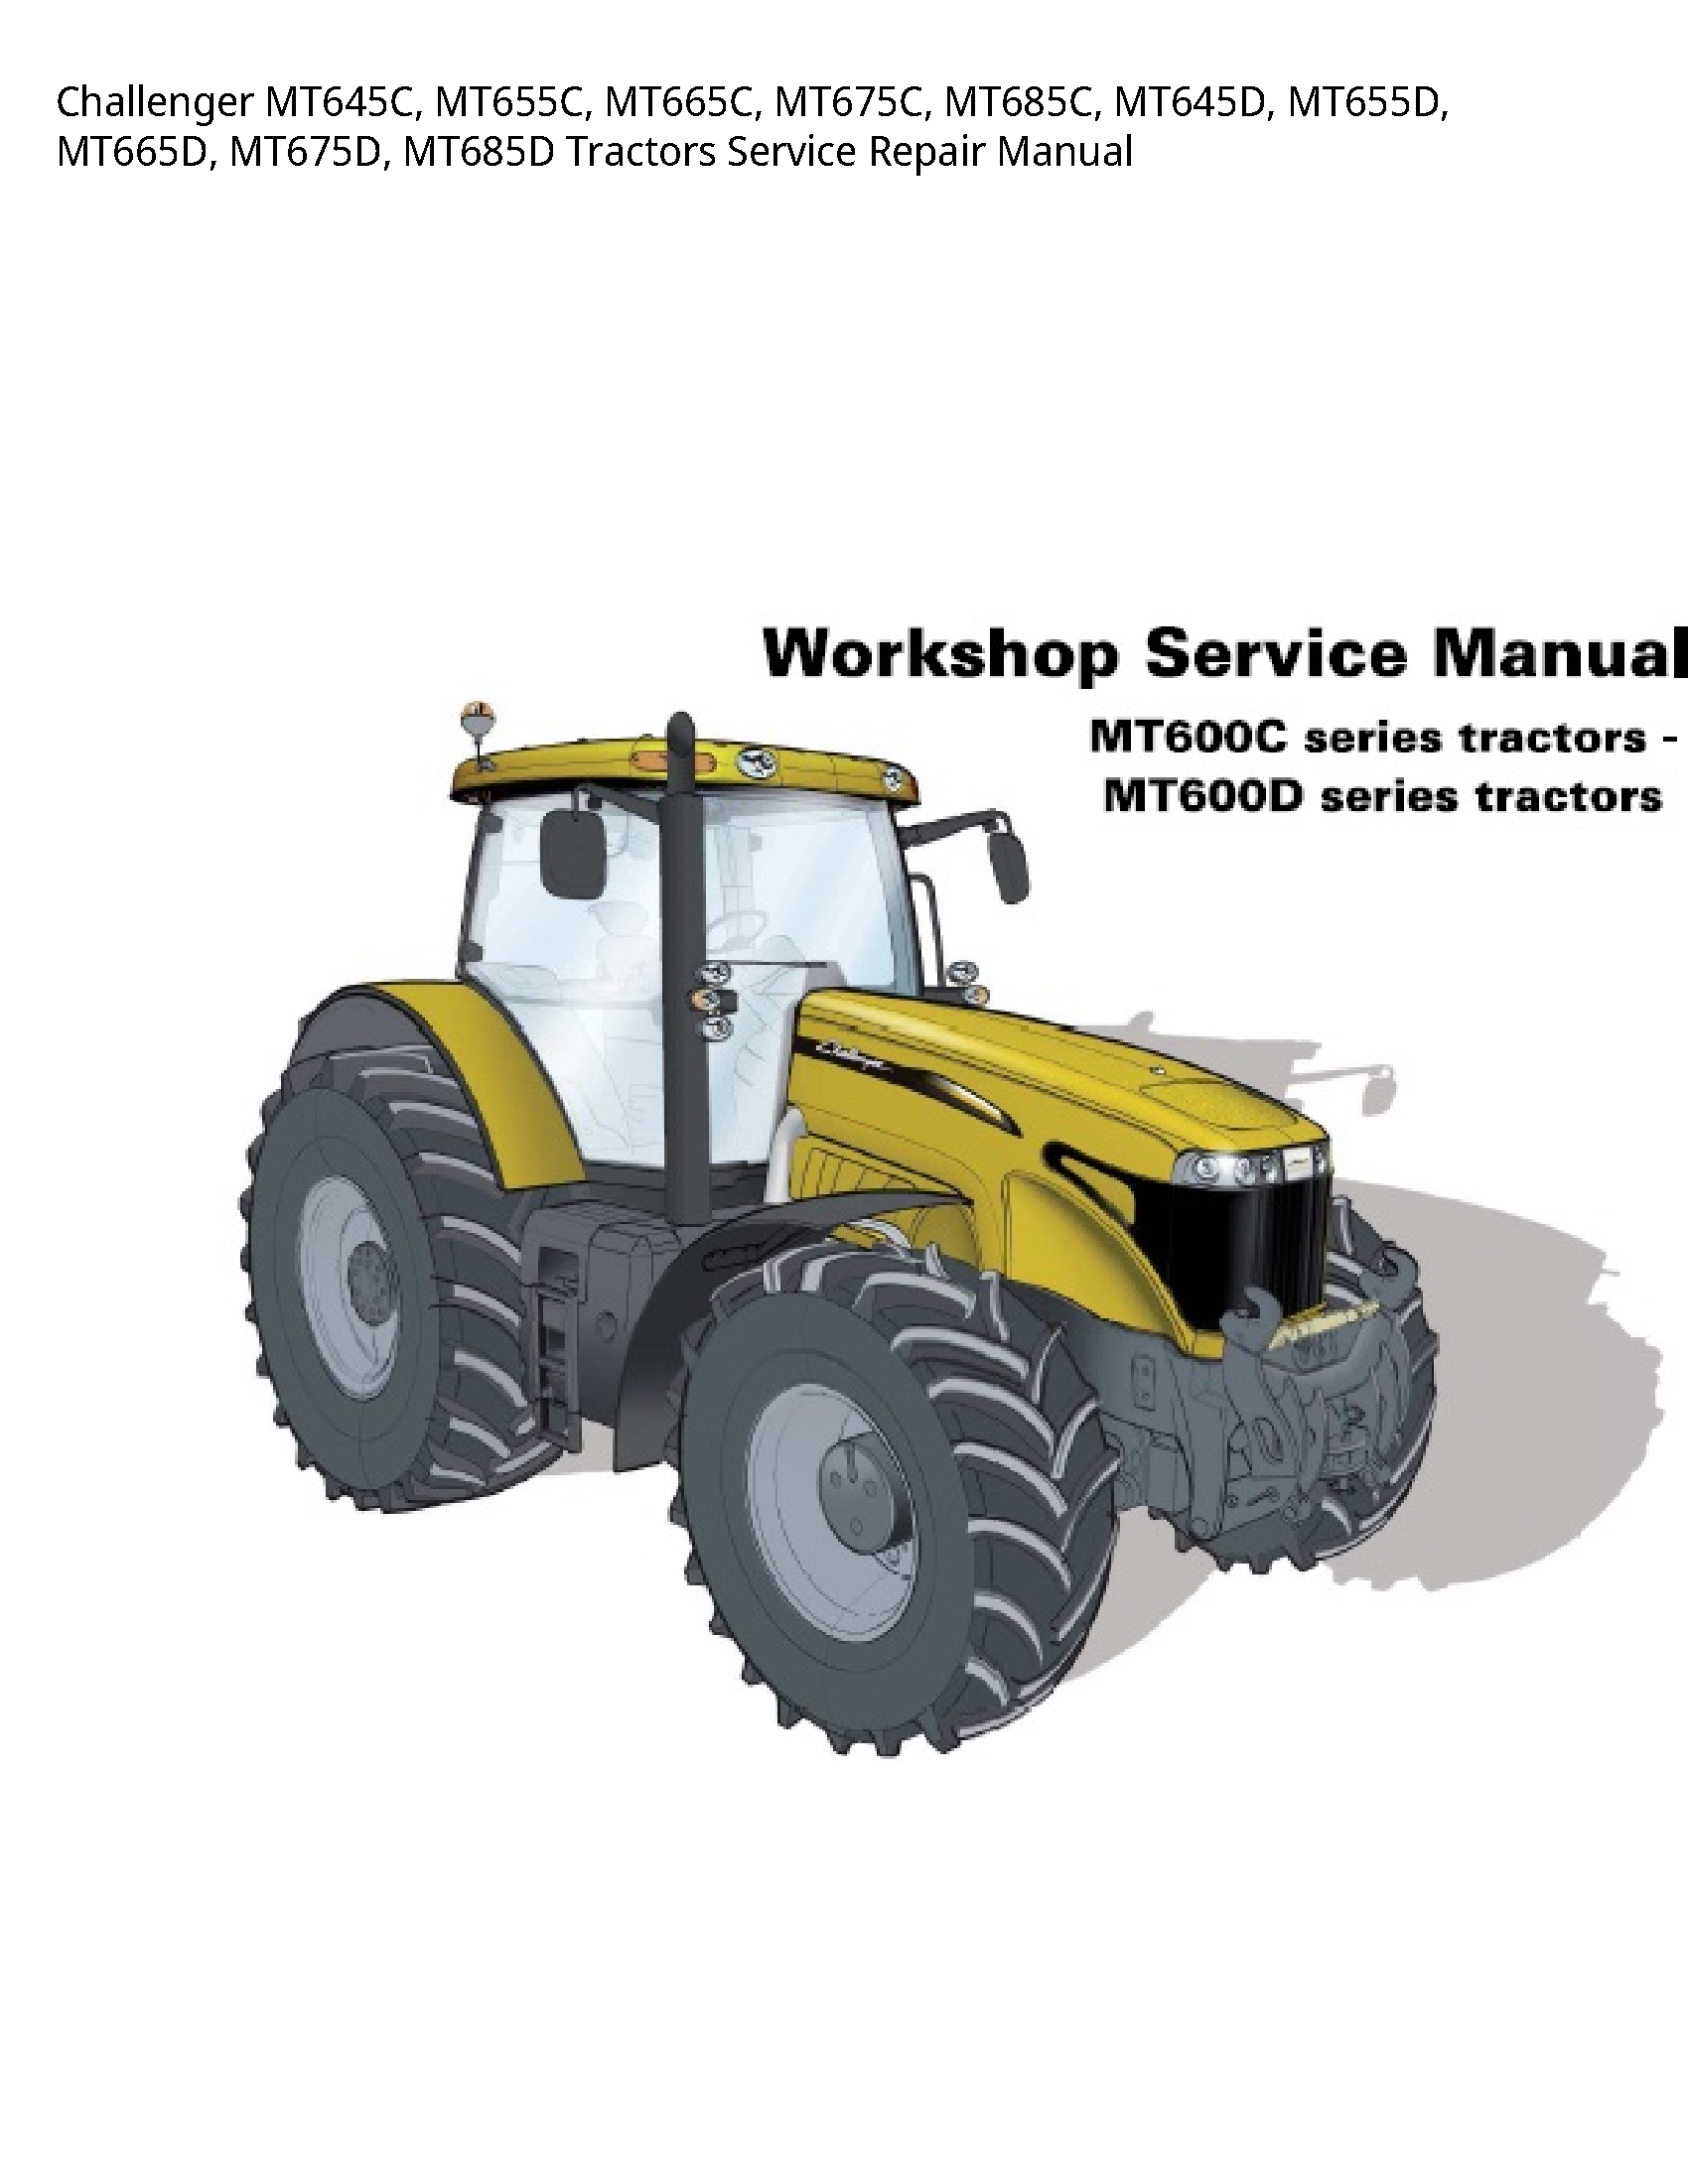 Challenger MT645C Tractors manual